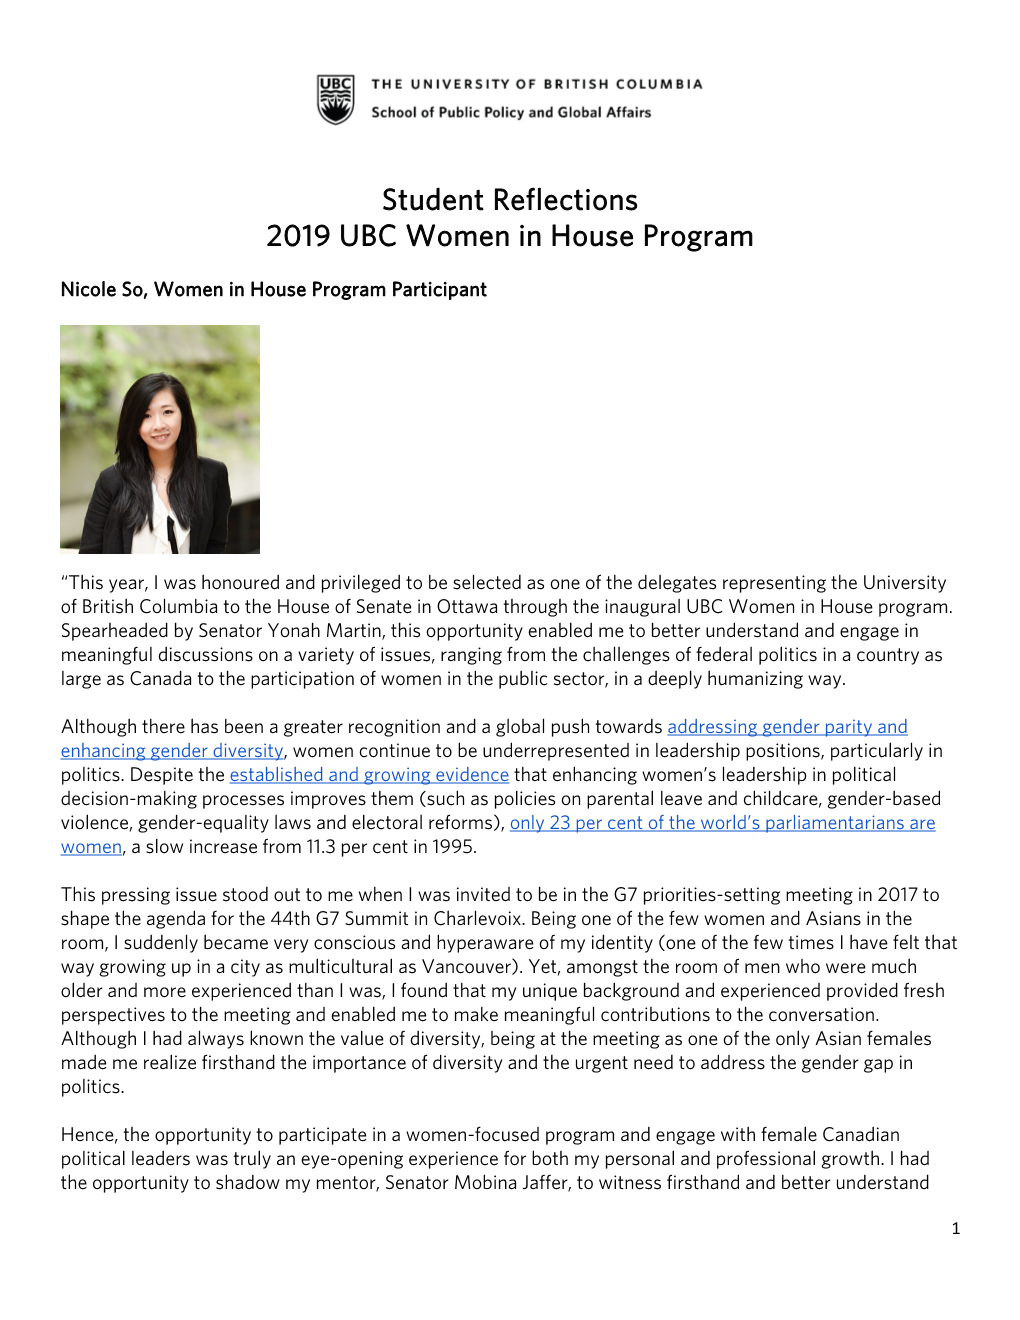 Student Reflections 2019 UBC Women in House Program